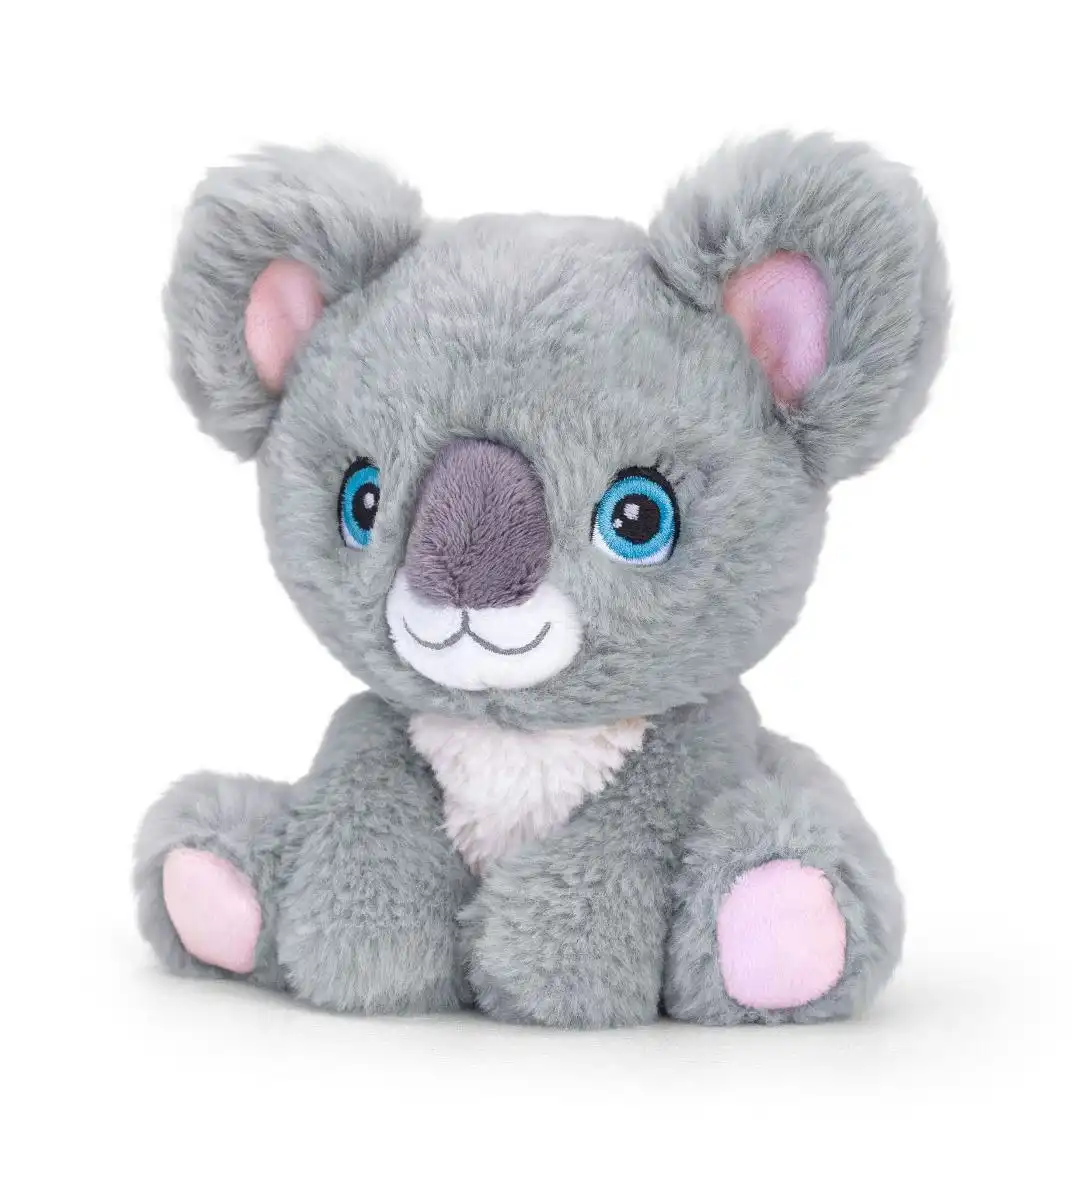 Adoptable World - Plush Koala by Keeleco 25cm